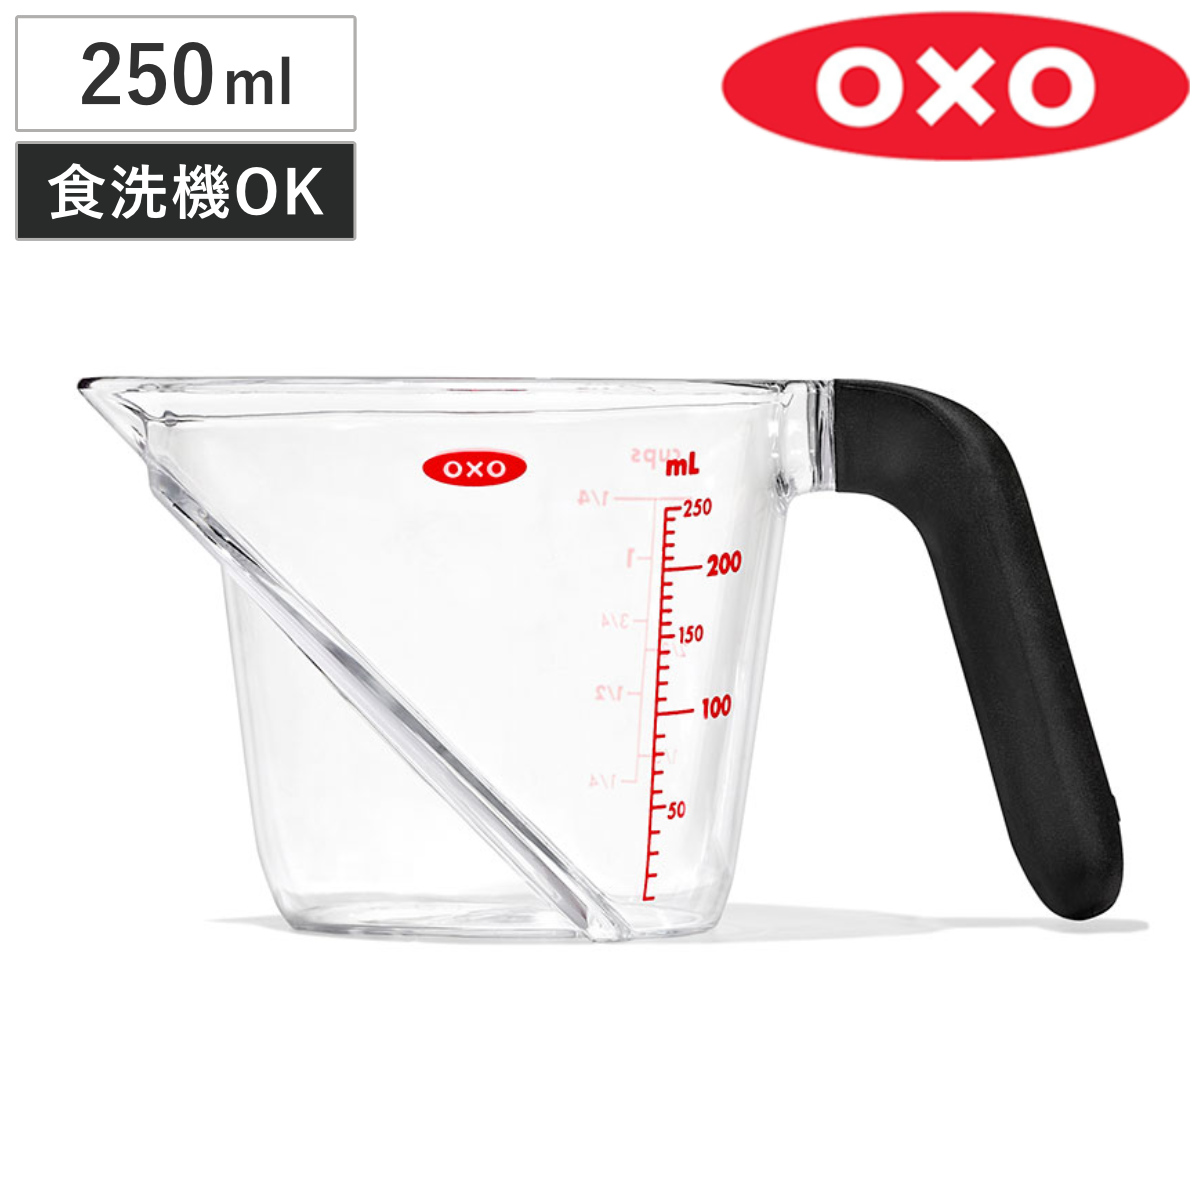 OXO 計量カップ 250ml アングルドメジャーカップ 小 GG （ メジャーカップ キッチンツール 食洗機対応 電子レンジ対応 オクソー 計量器具